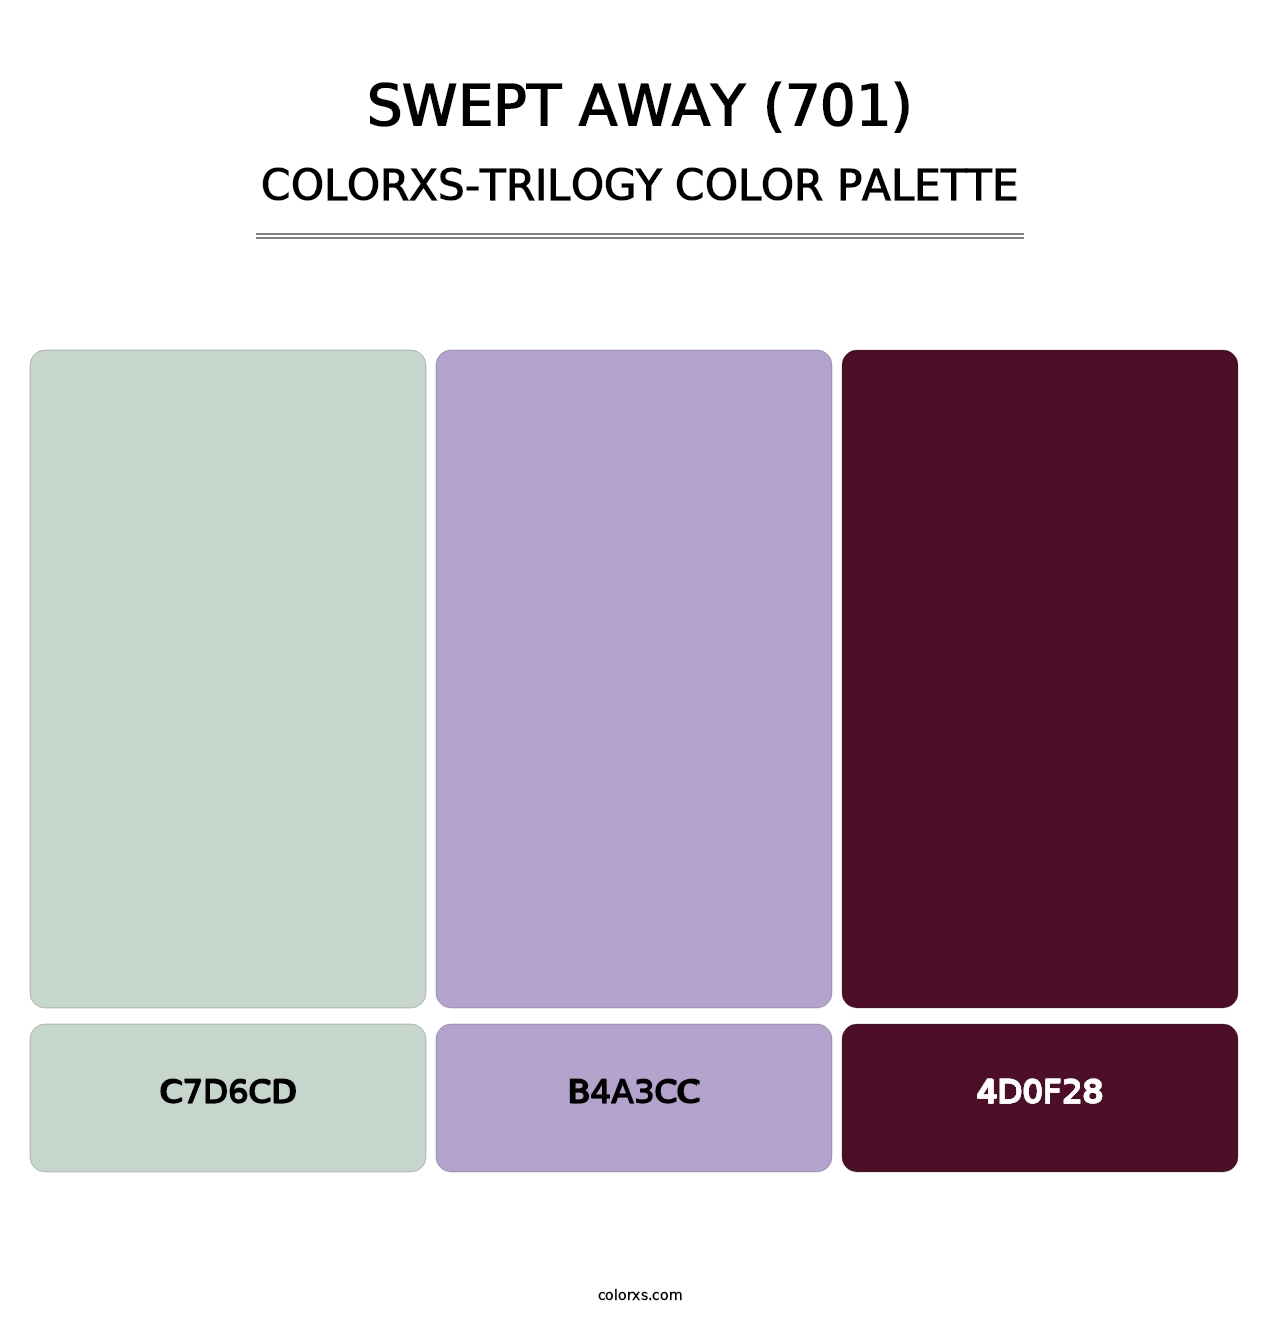 Swept Away (701) - Colorxs Trilogy Palette